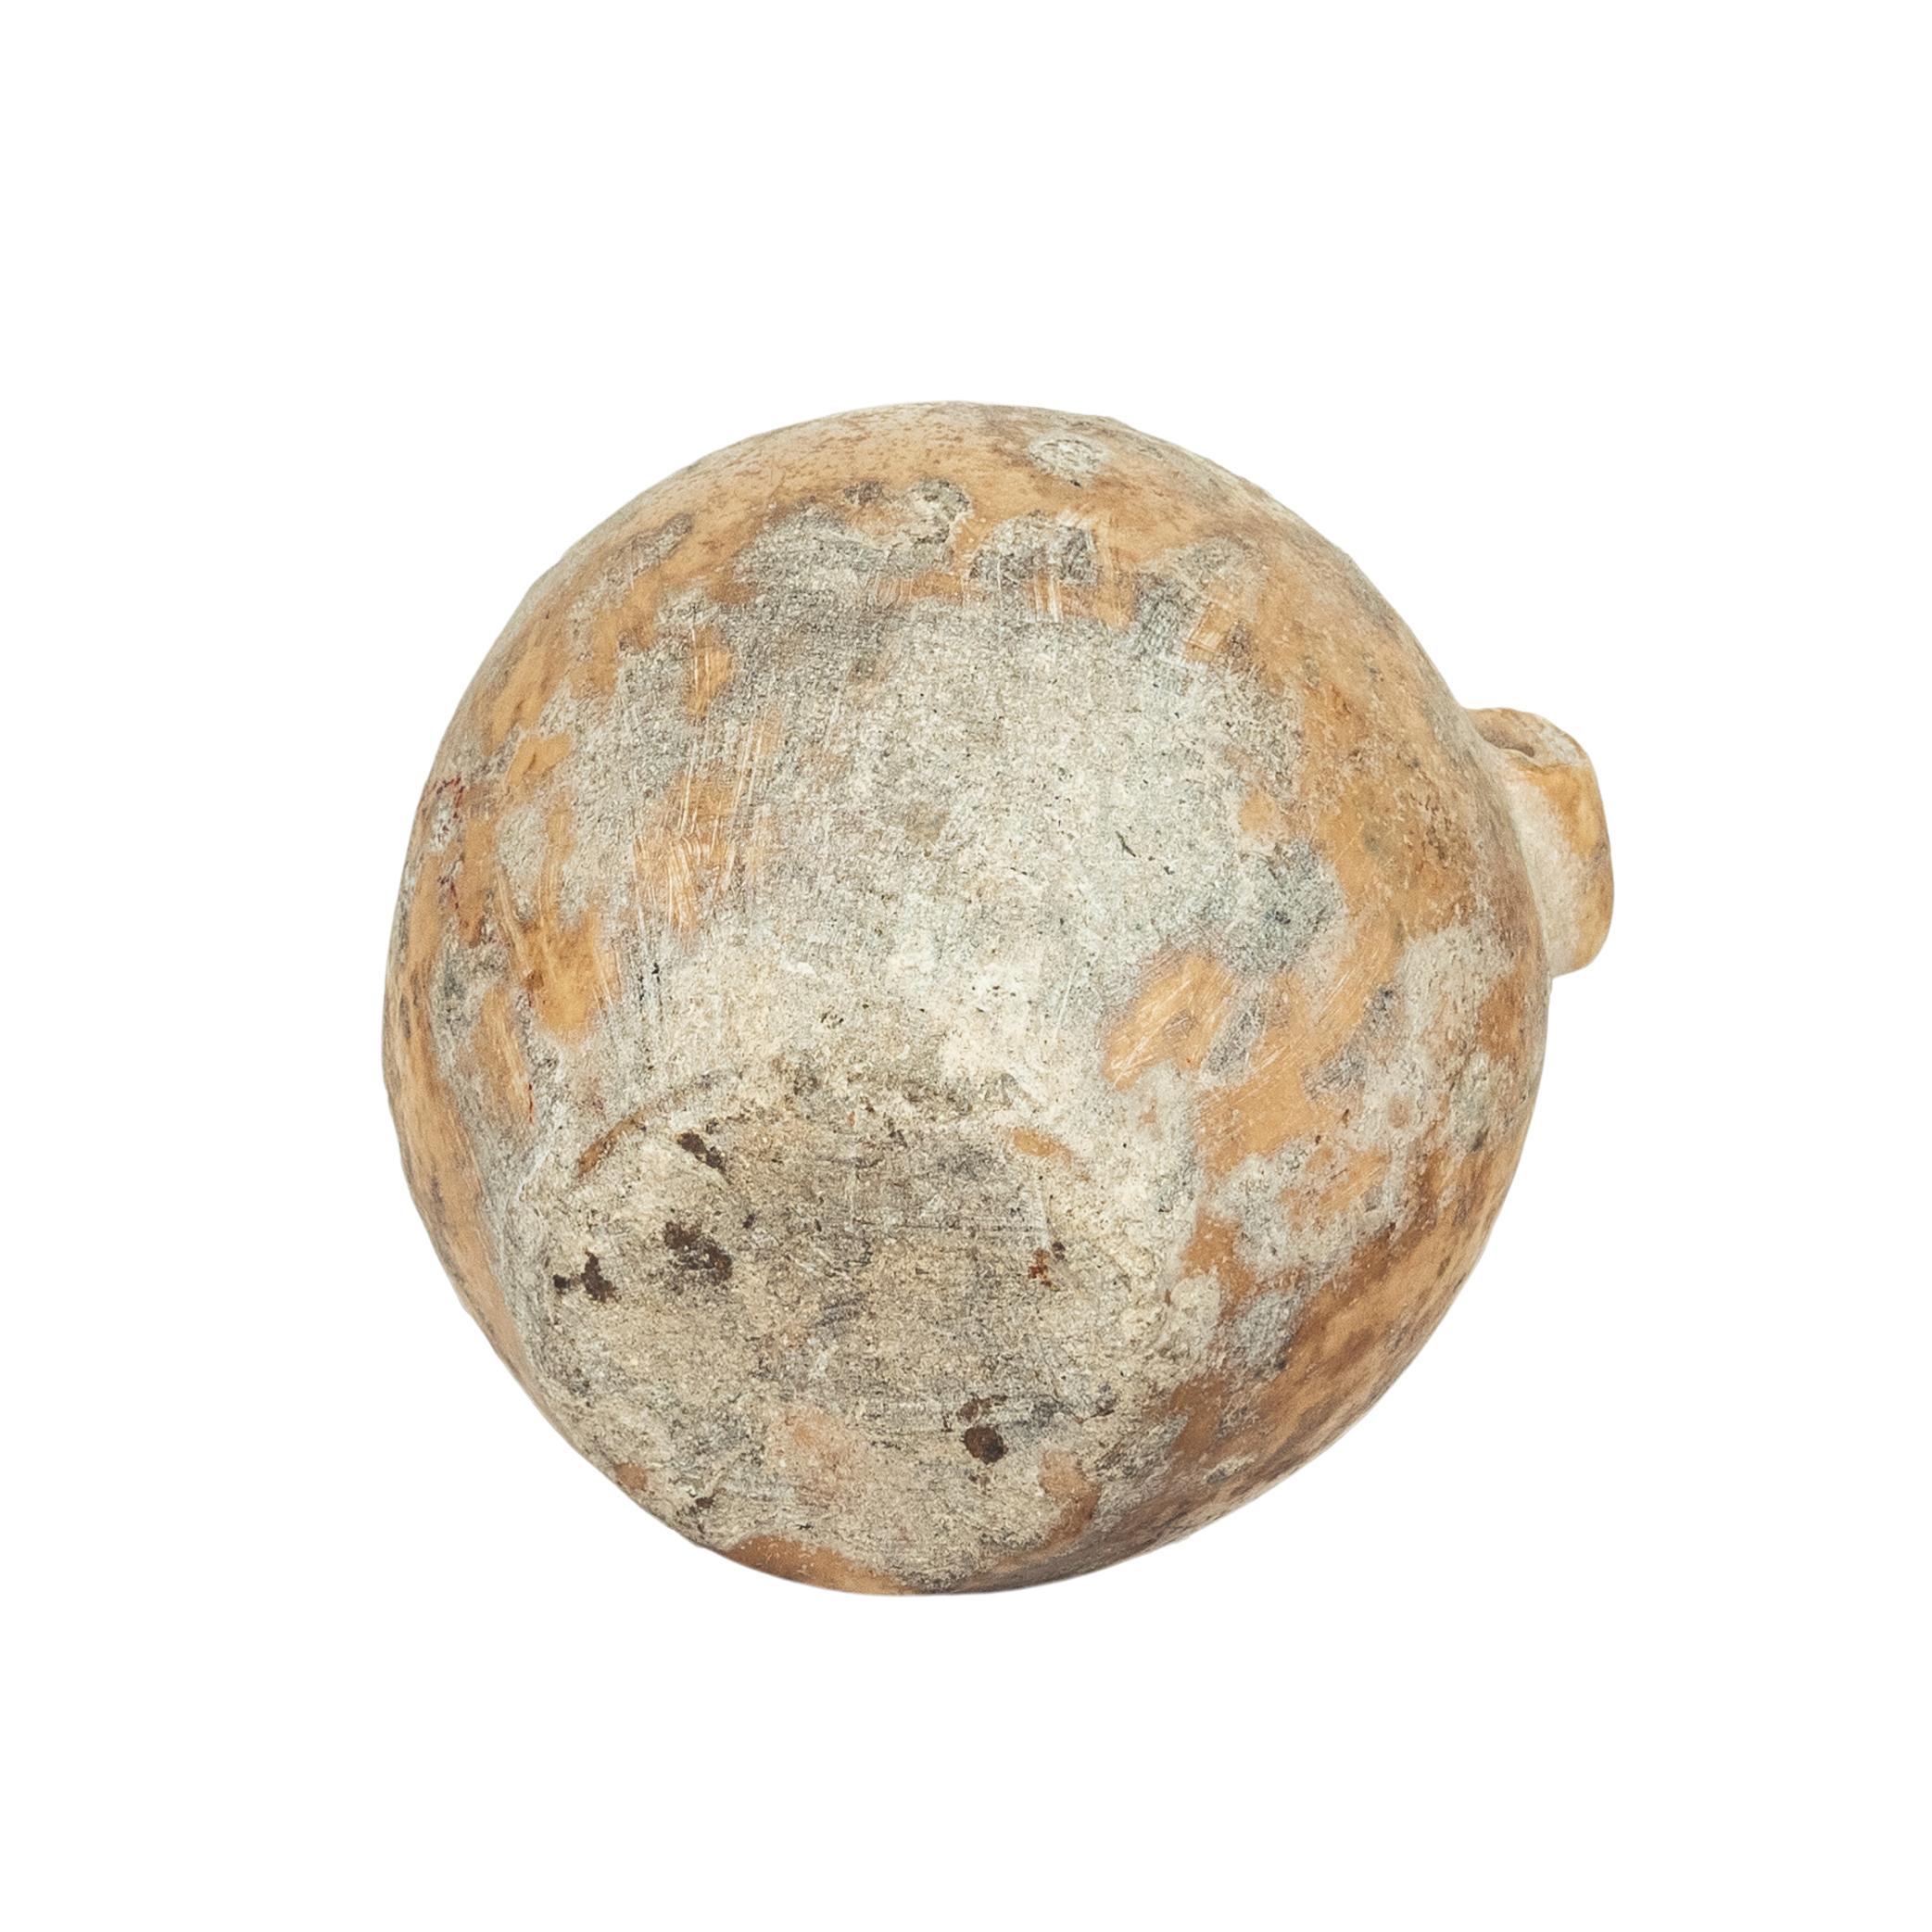 Ancienne Égypte Ancien Empire Miniature A Stone Vessel Jar 2600-2800 BCE 5